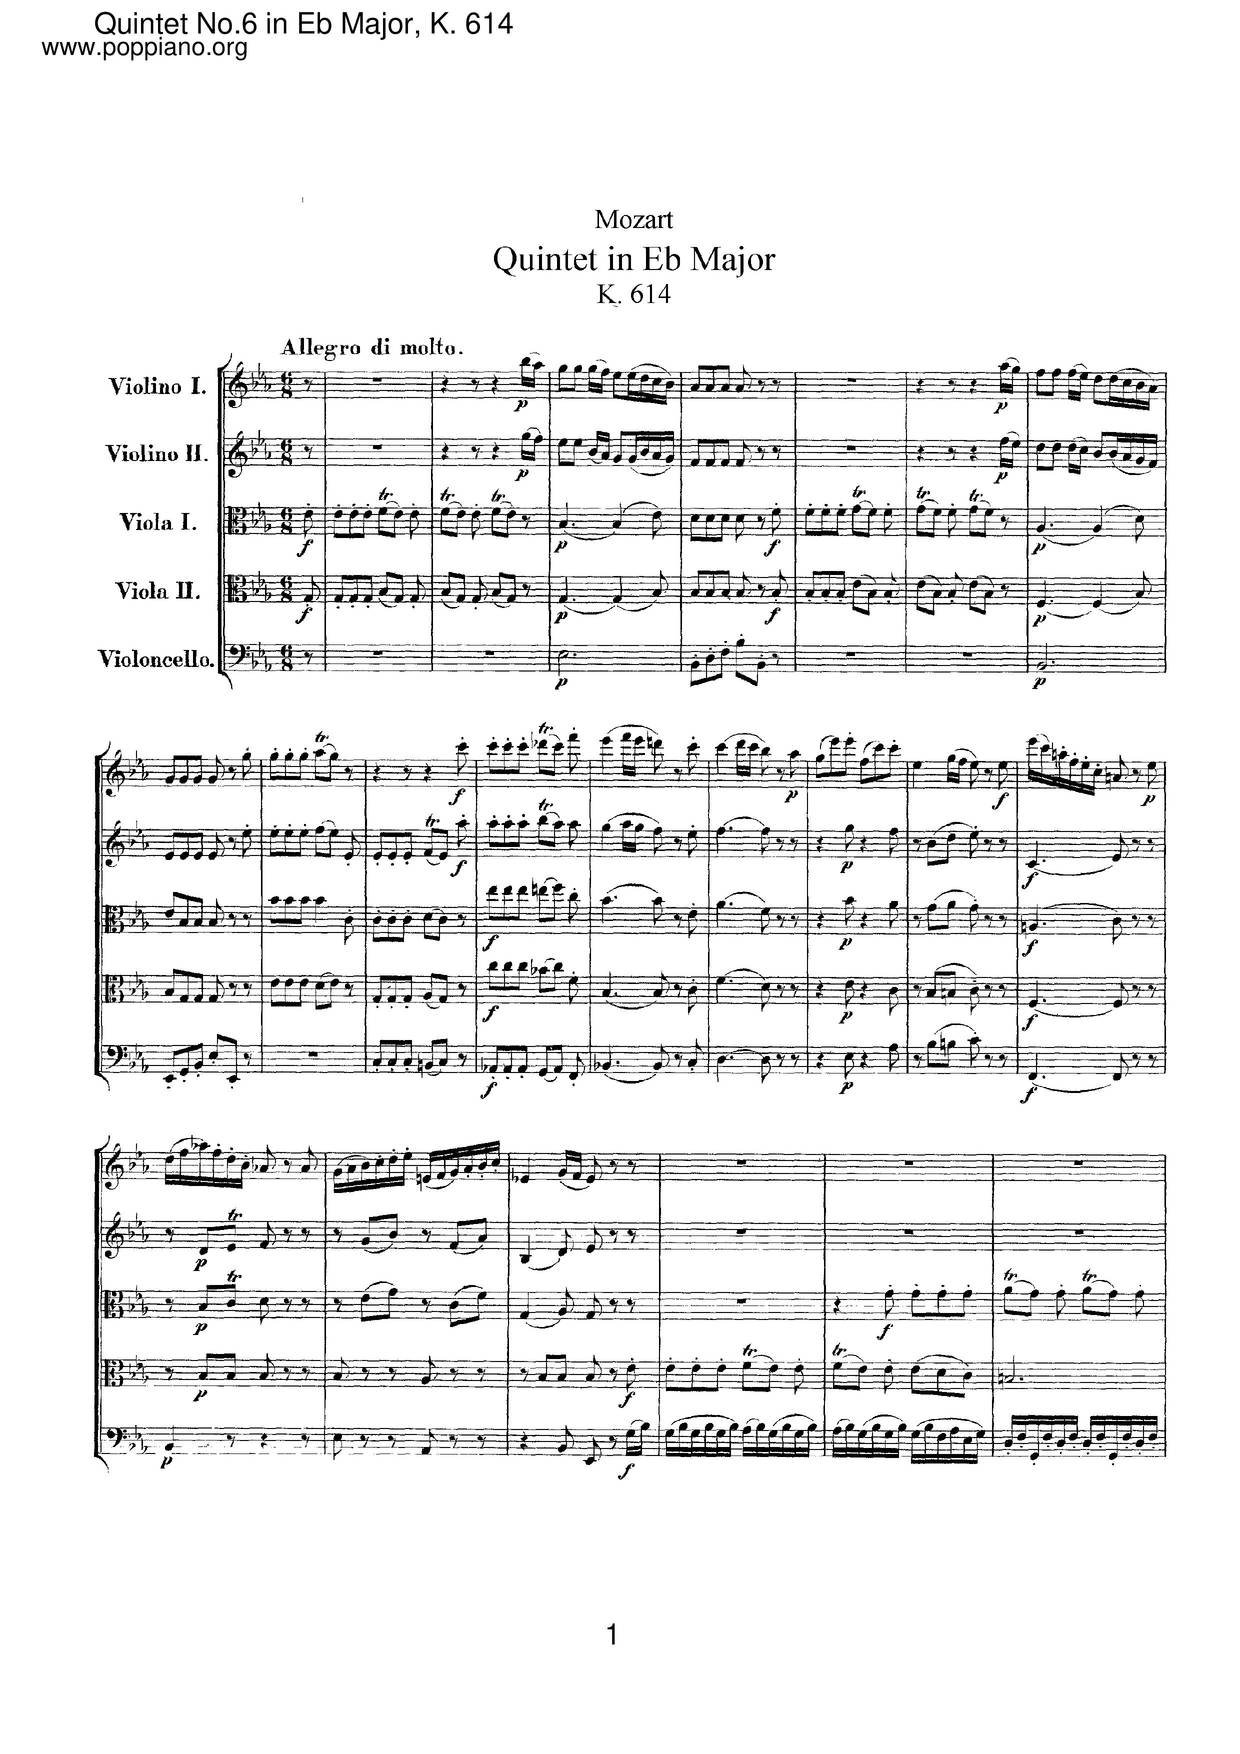 String Quintet No. 6 In E Flat Major, K. 614 Score